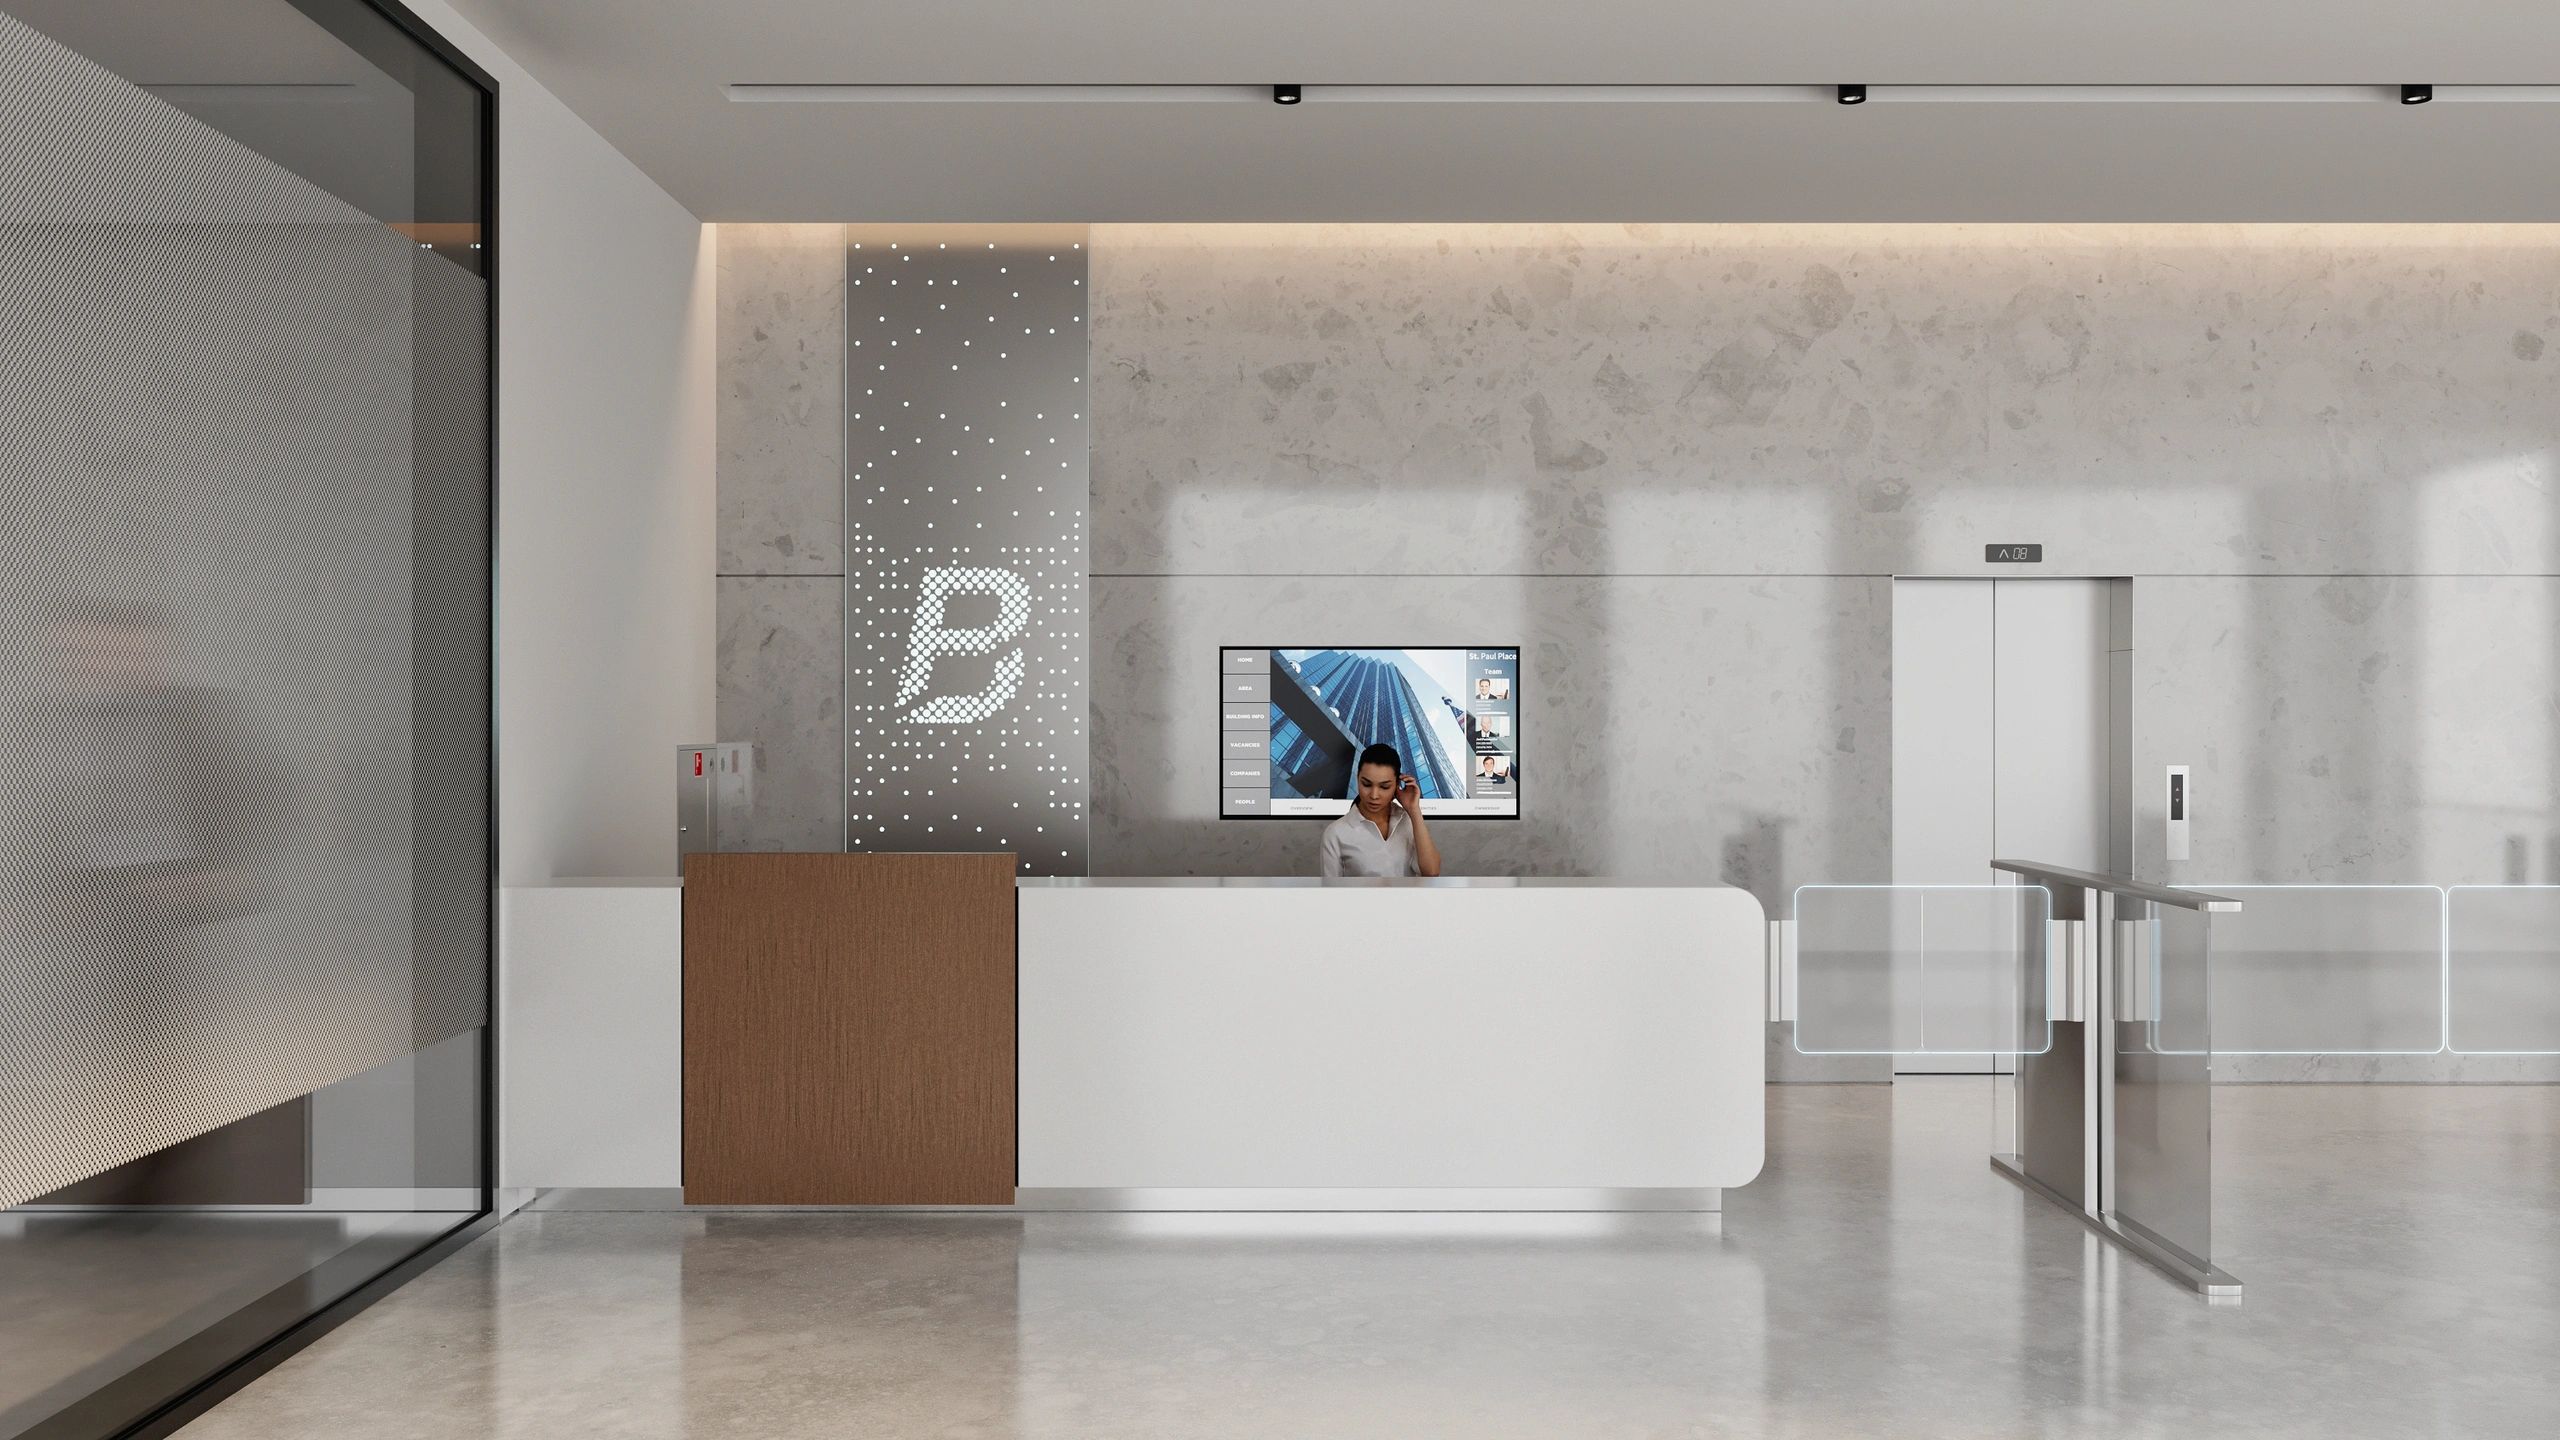 The benefit company bahrain reception interior design